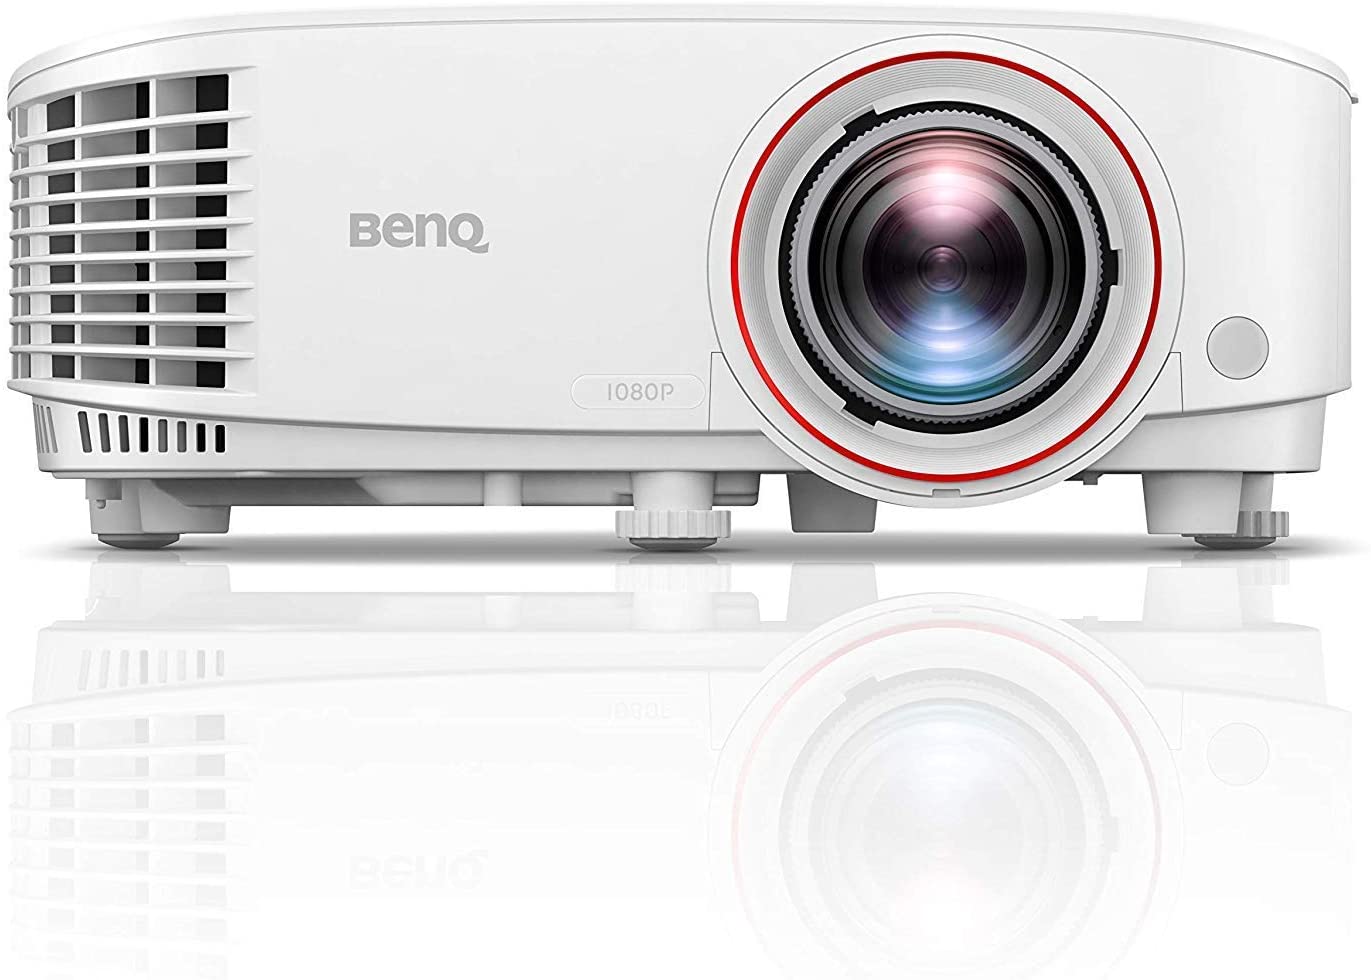 BENQ TH671ST (Best 4K Projector Under $1000):